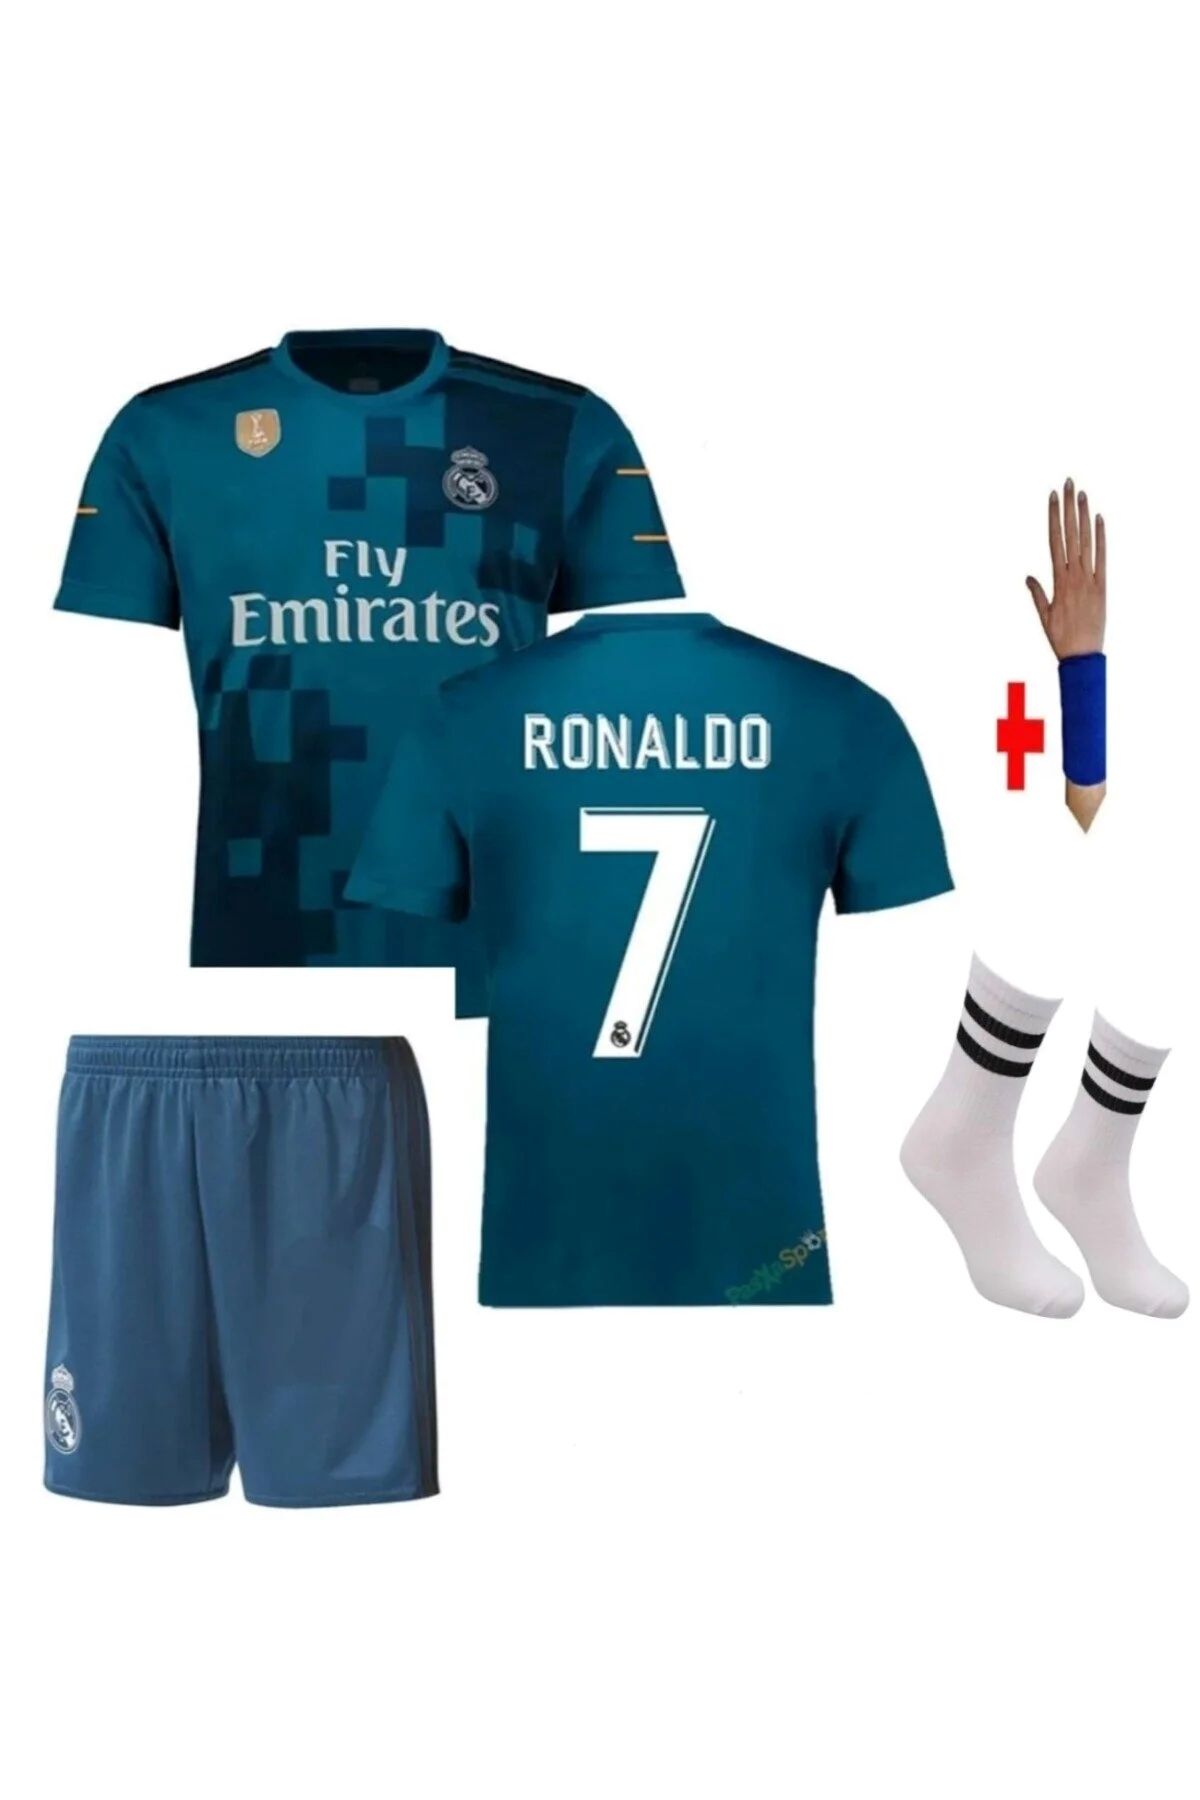 yenteks Cristiano Ronaldo Turkuaz Mavisi Real Madrid 2017/18 Sezon Çocuk Futbol Forması 4'lü Set Şşş1